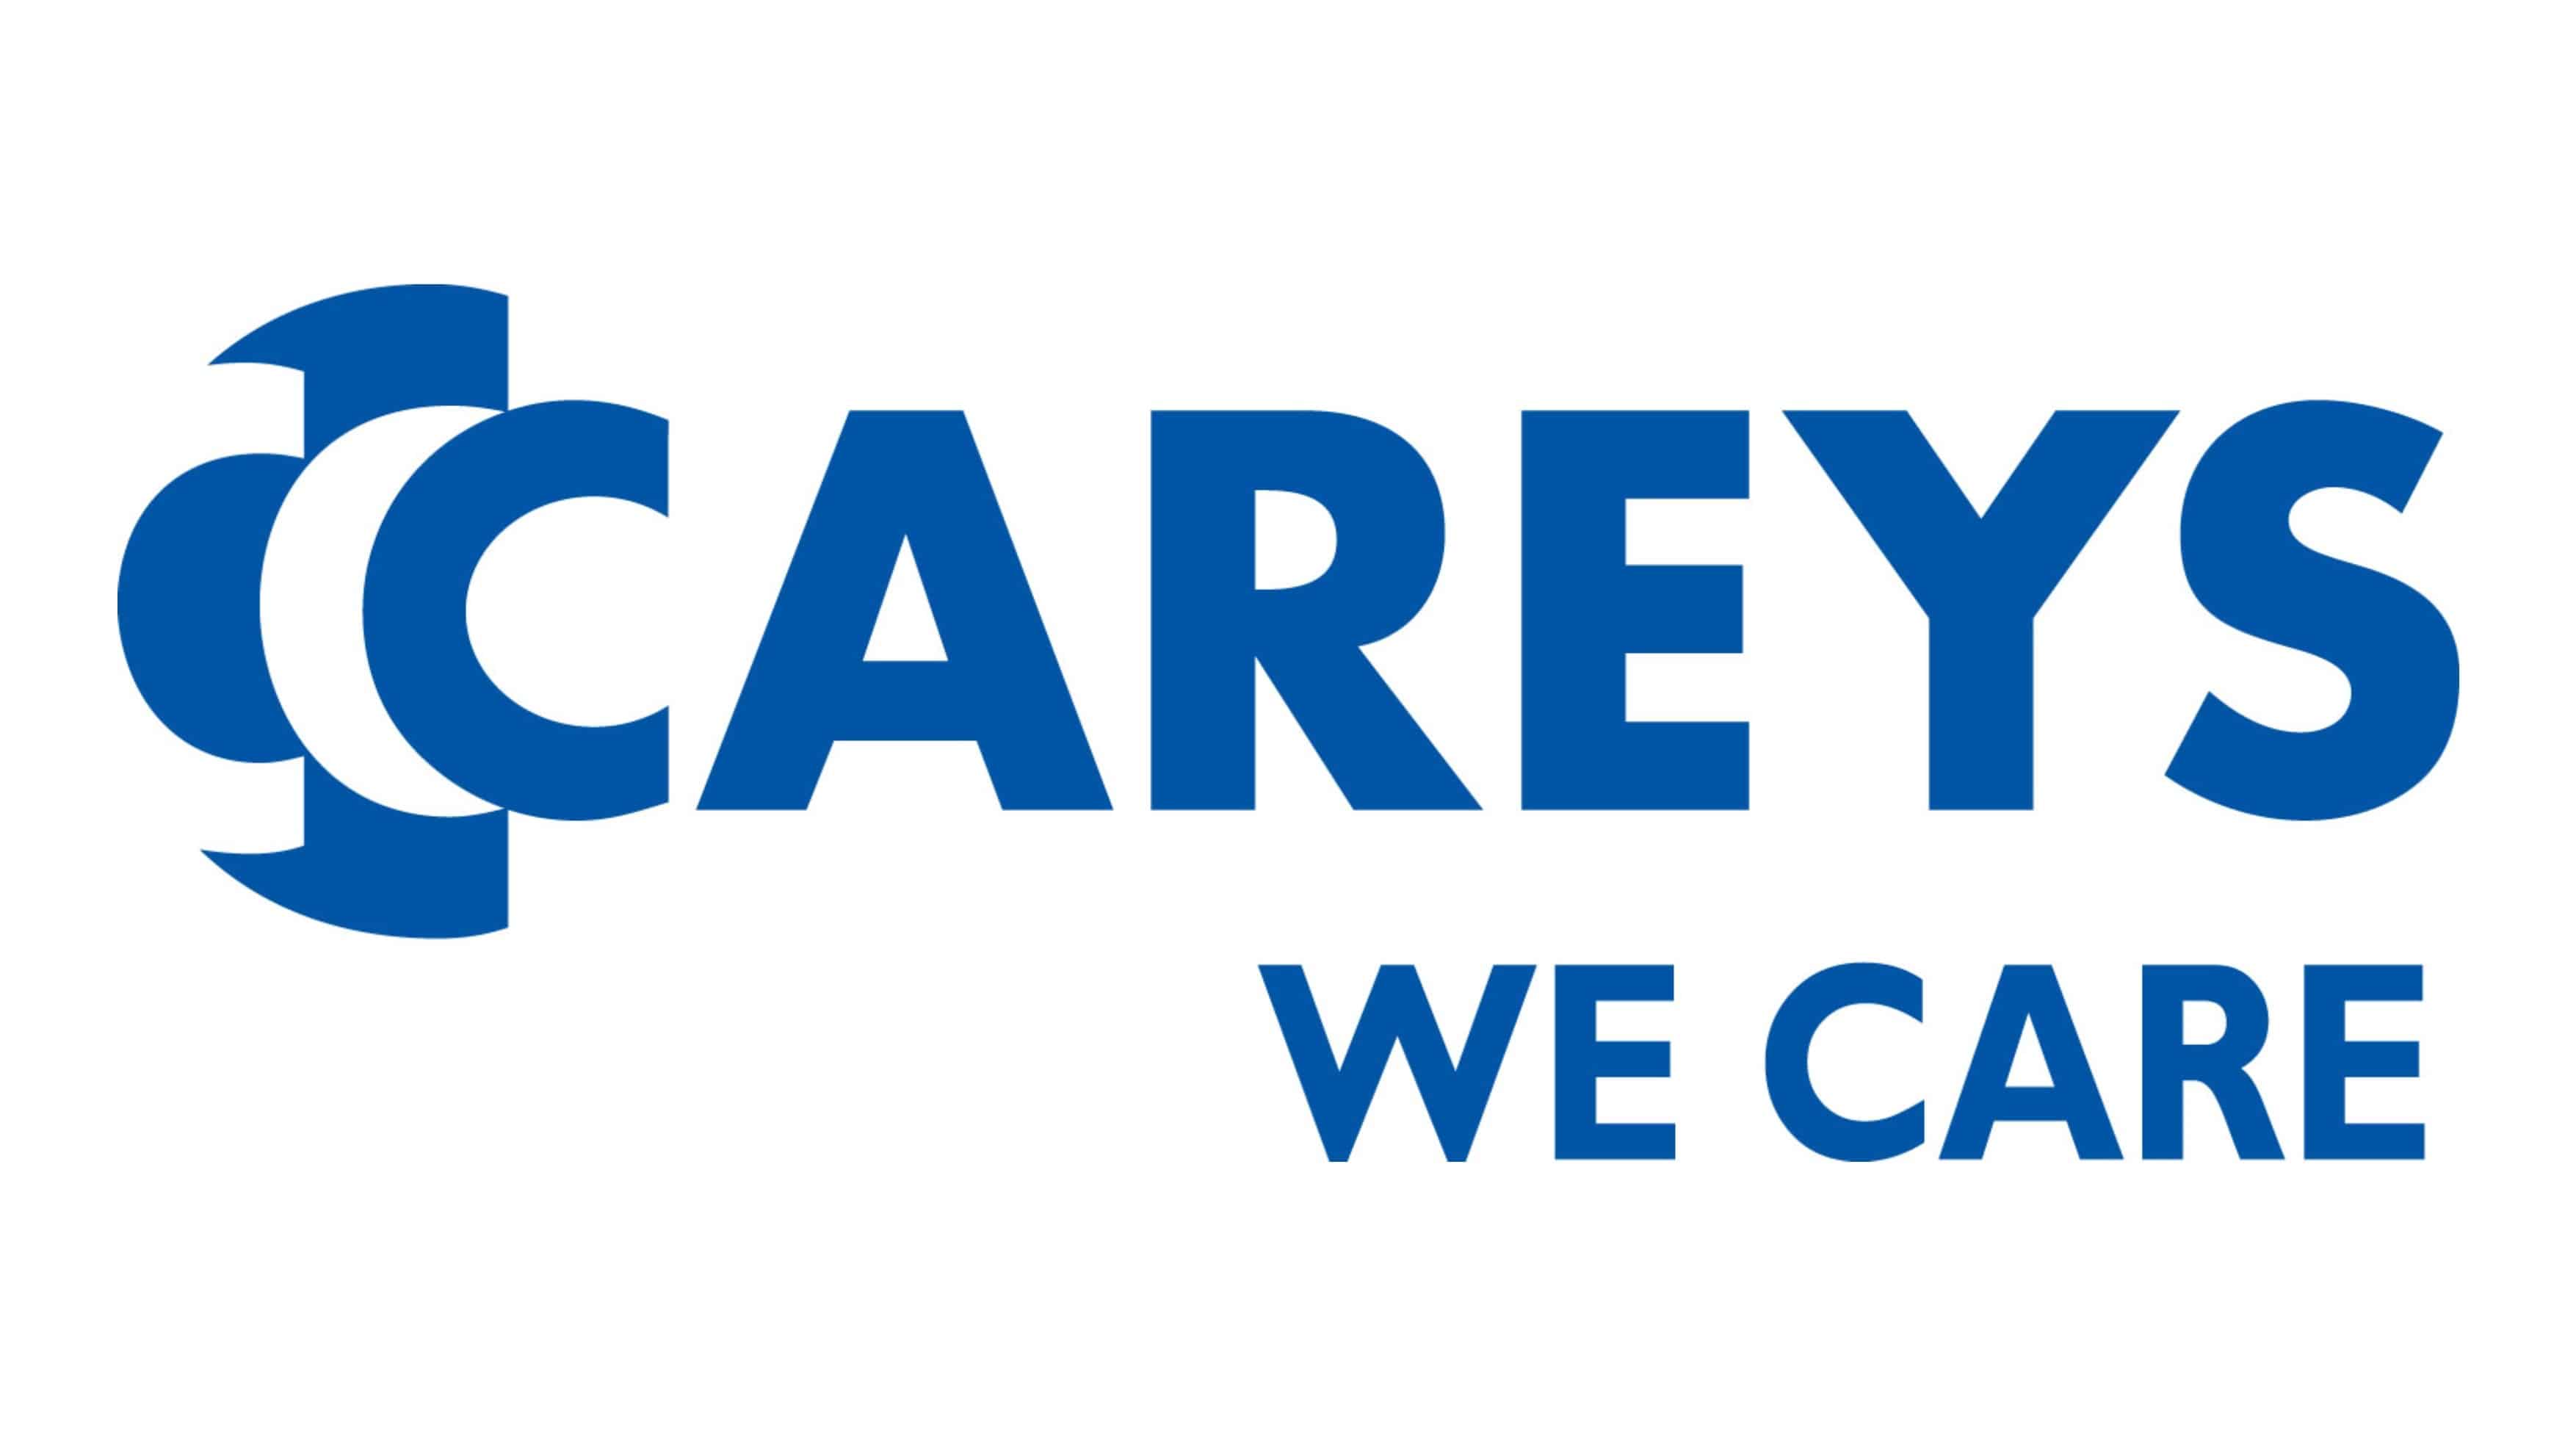 Careys-web-logo